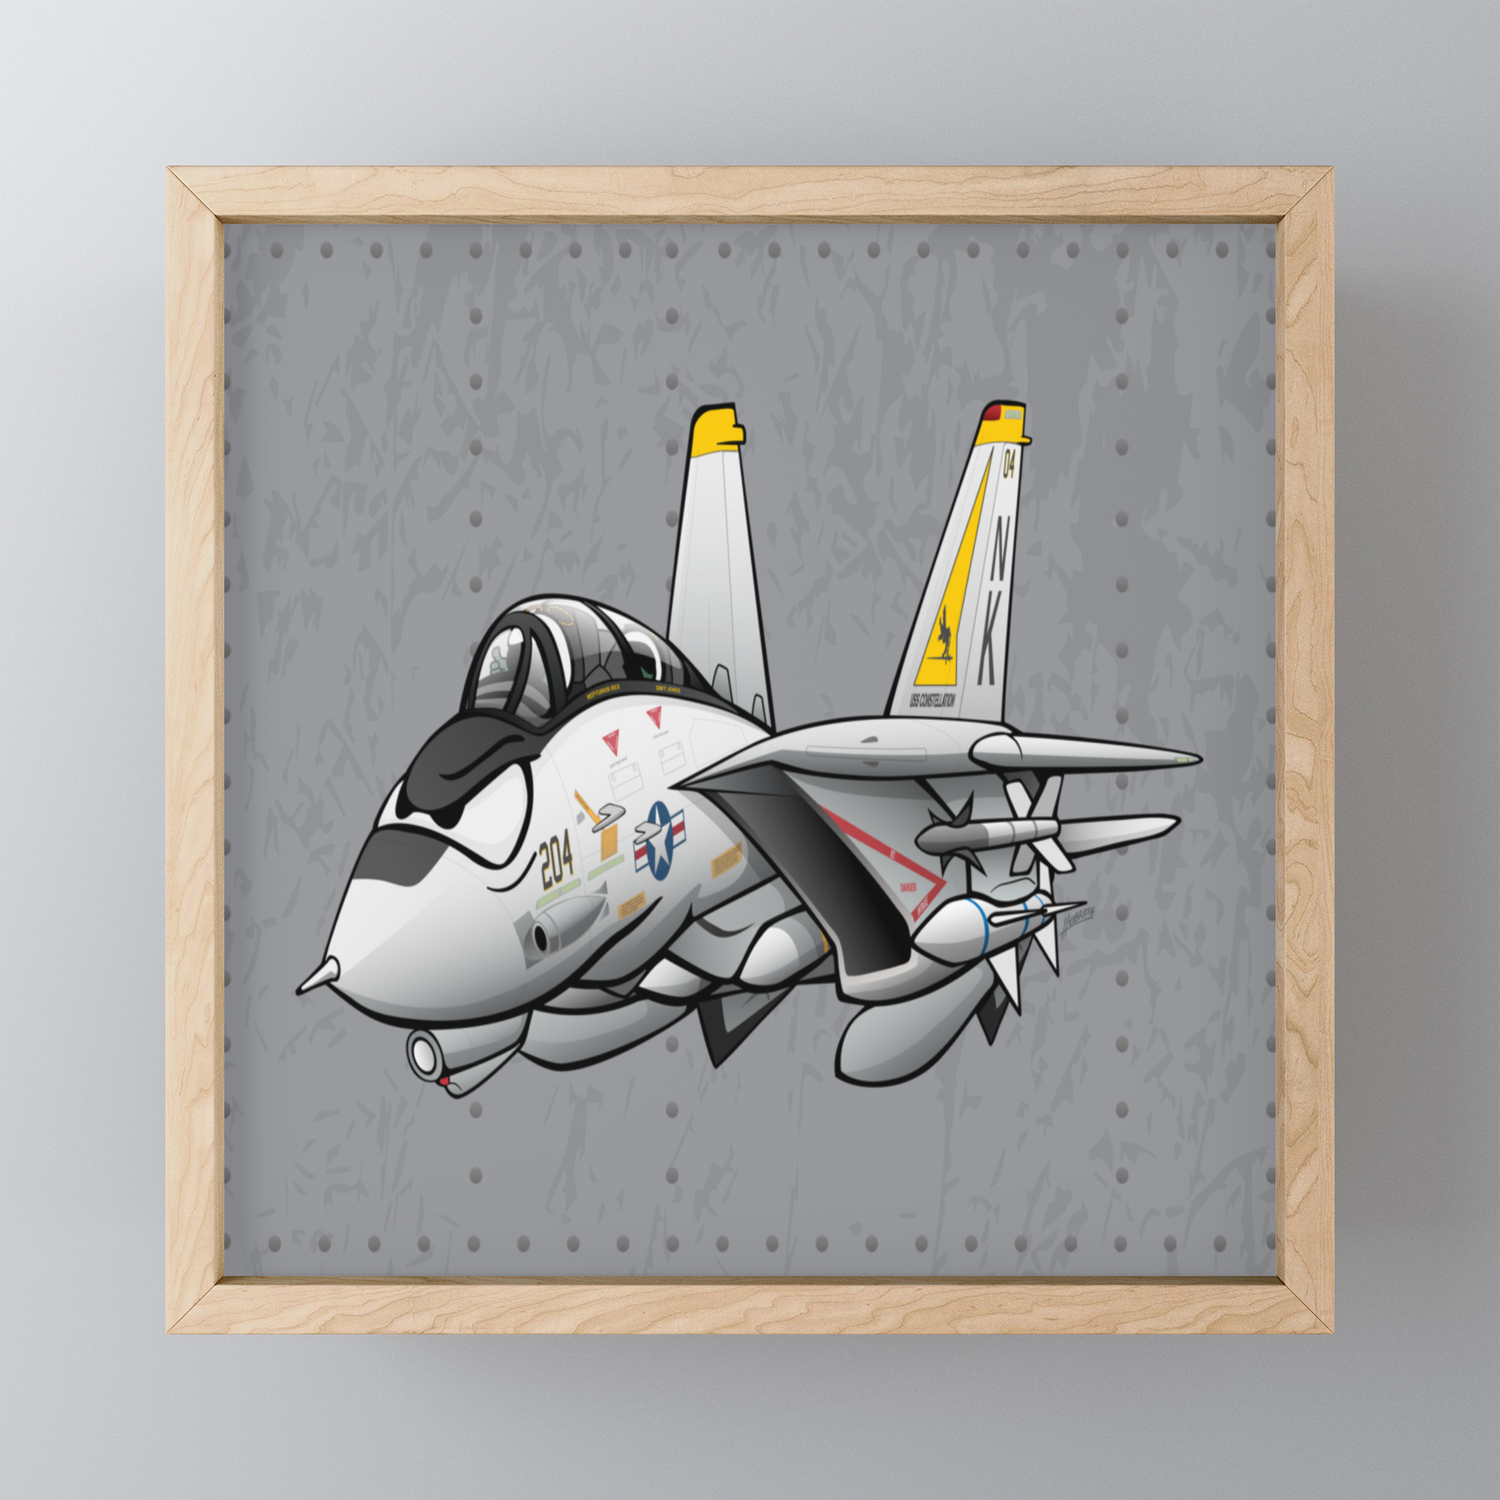 Fighter Jet Cartoon